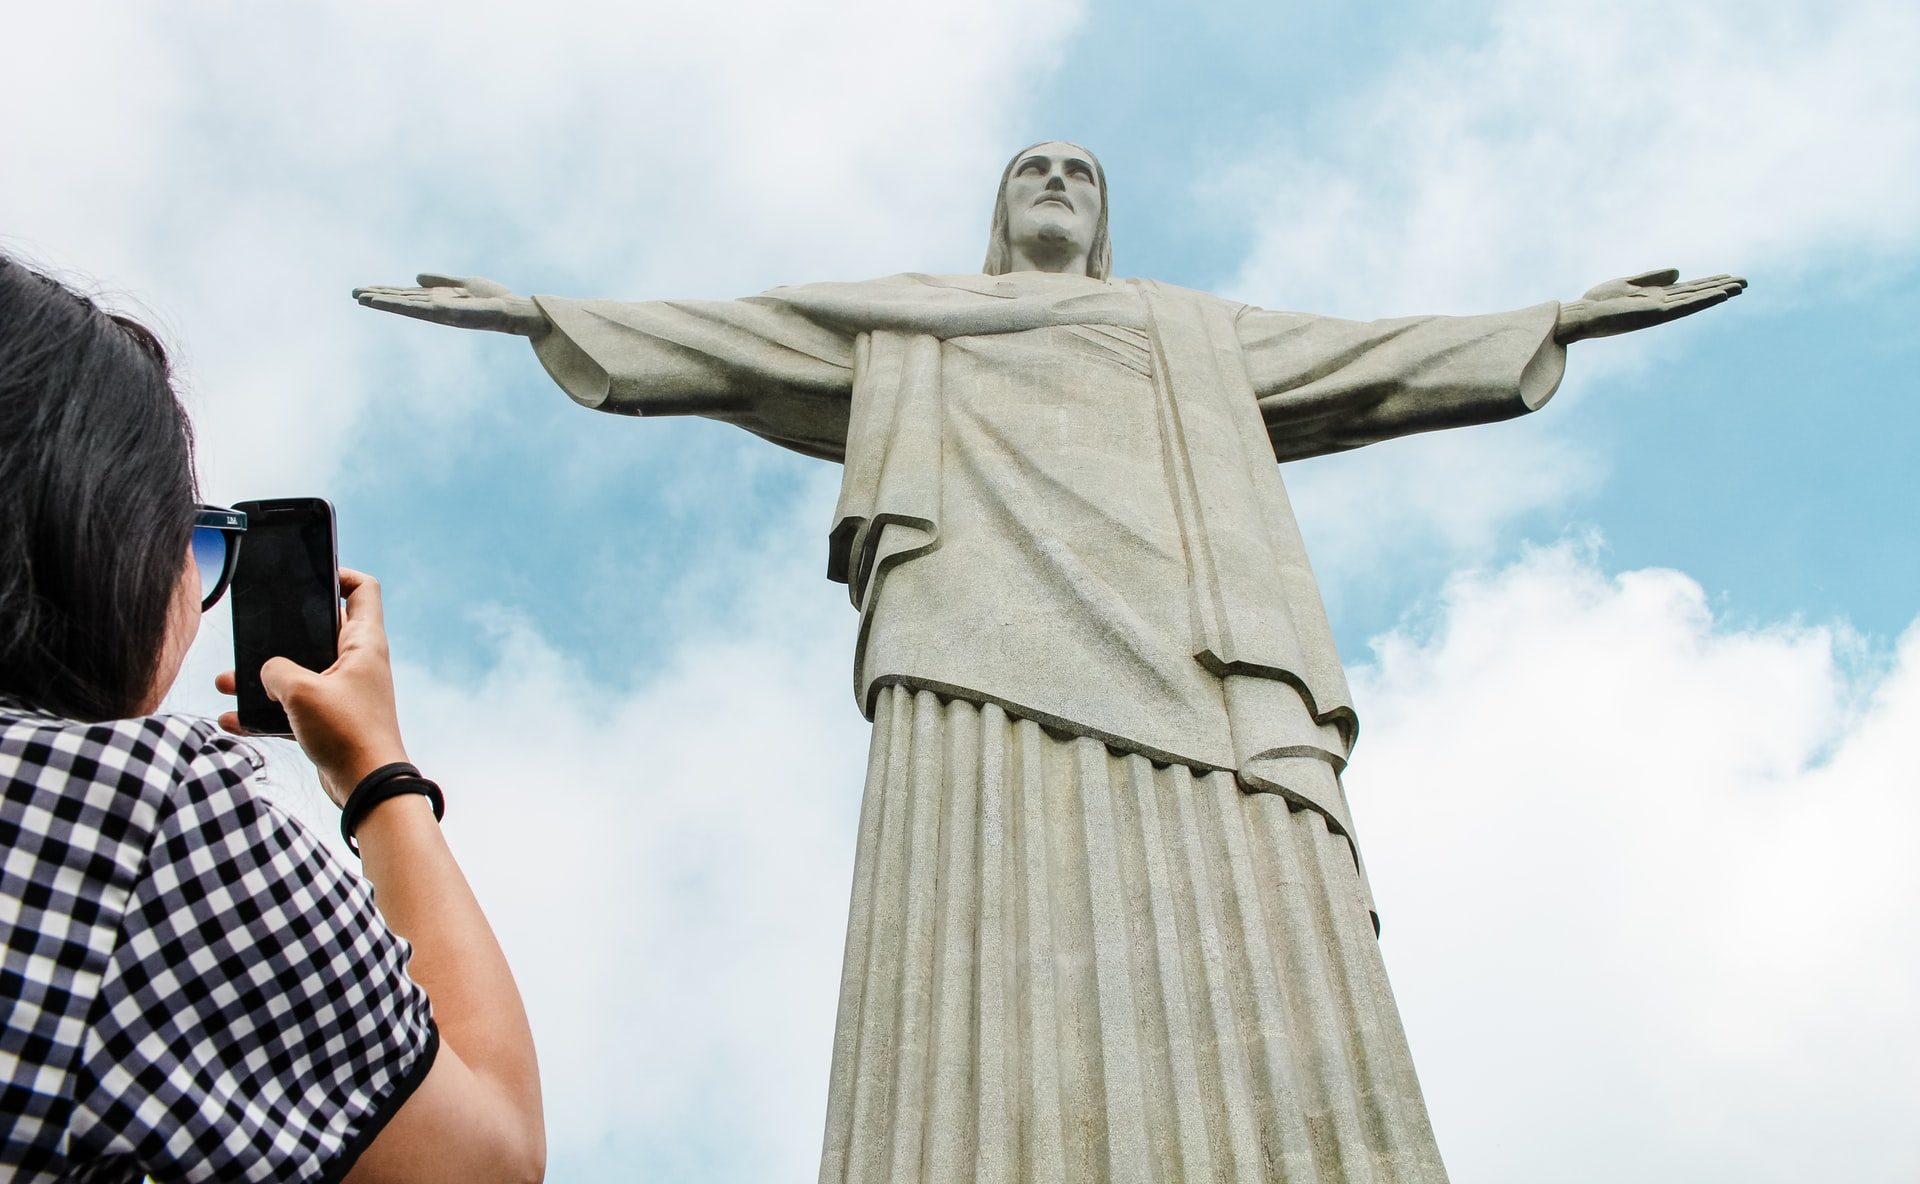 Christ the Redeemer in Brazil